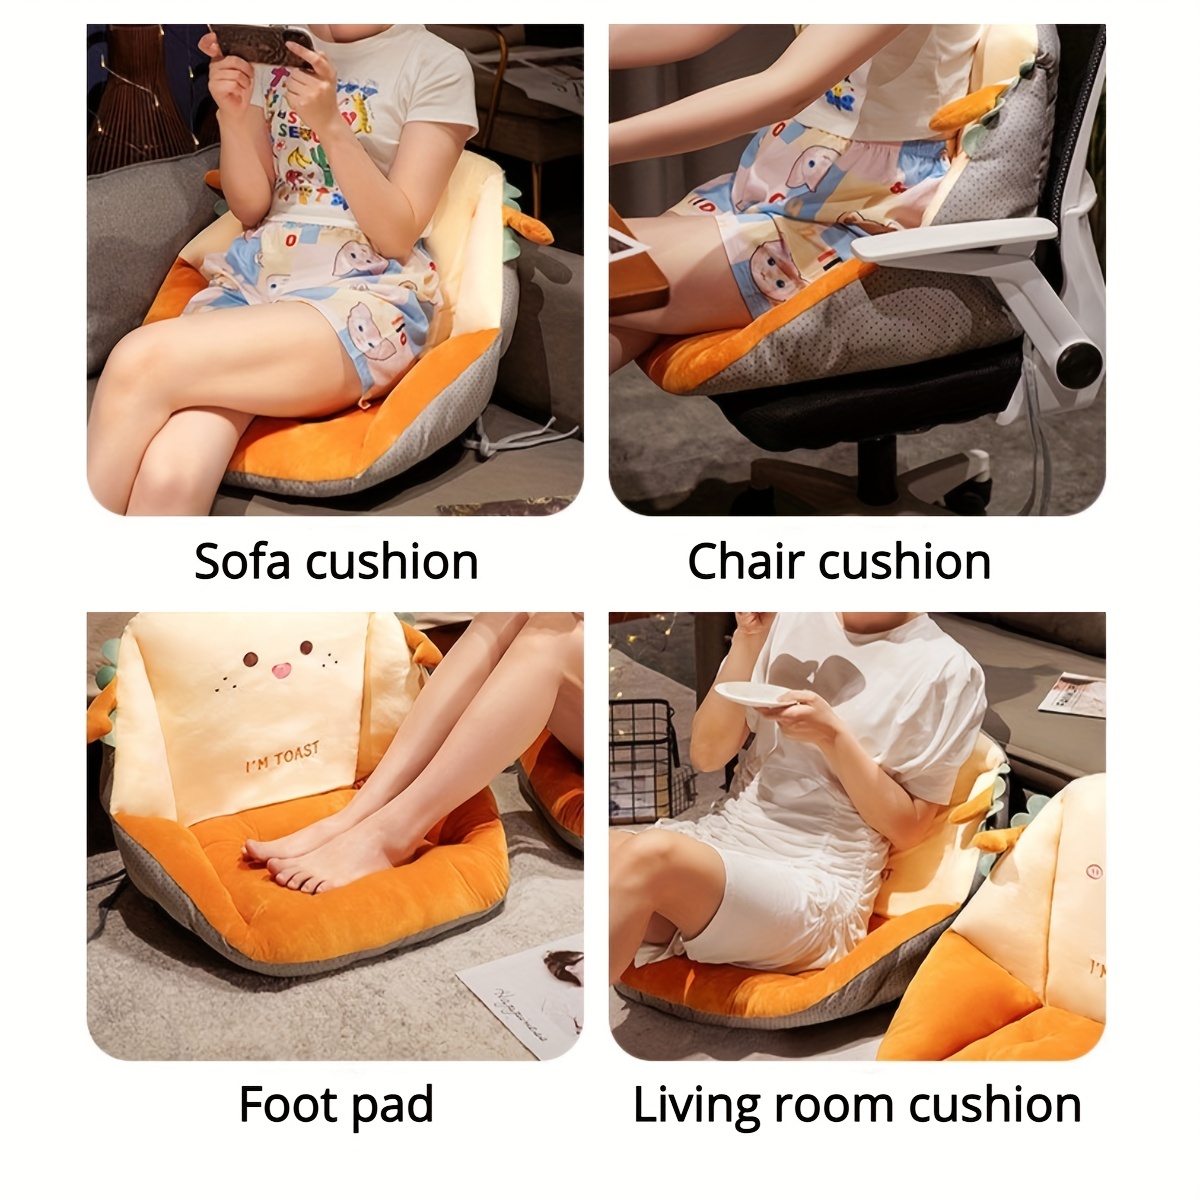 QIUODO Cute Chair Cushion, Gaming Chair Cushion with Backrest Non-Slip, Comfy Seat Cushion for Office Desk, Kawaii Chair Cushions for Gamer, Soft